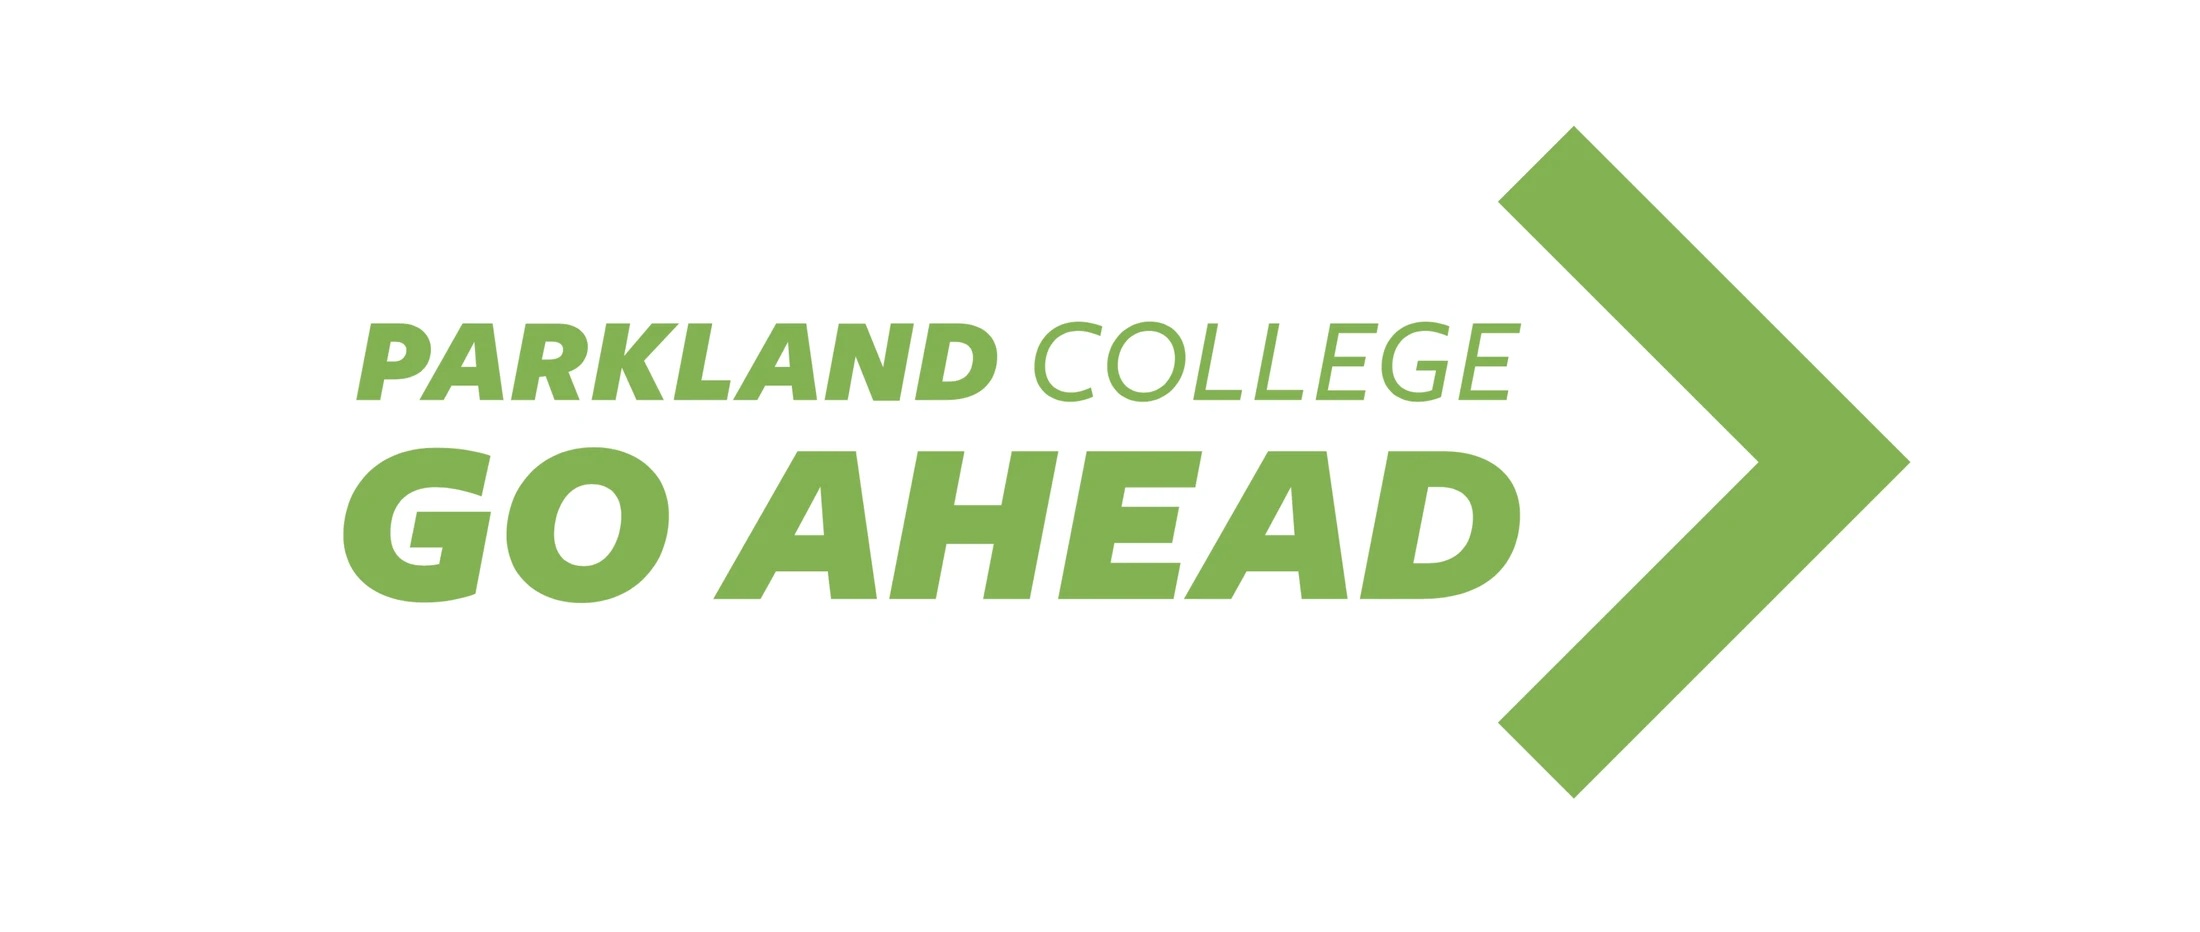 Parkland college go ahead logo.